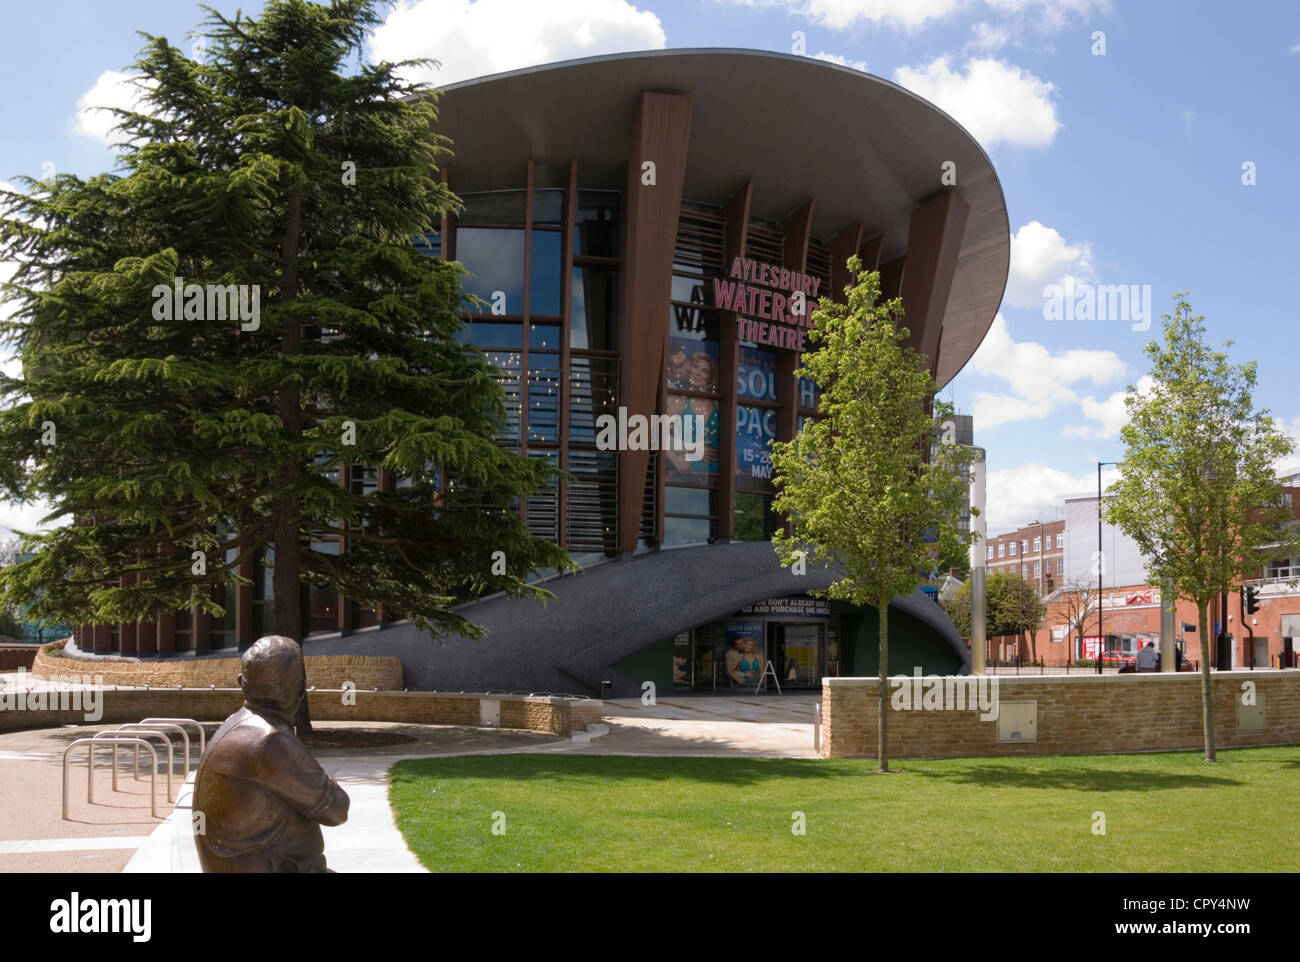 Bucks - Aylesbury - Waterside Theatre - seduto statua Ronnie Barker - contemplando questo nuovo edificio moderno Foto Stock